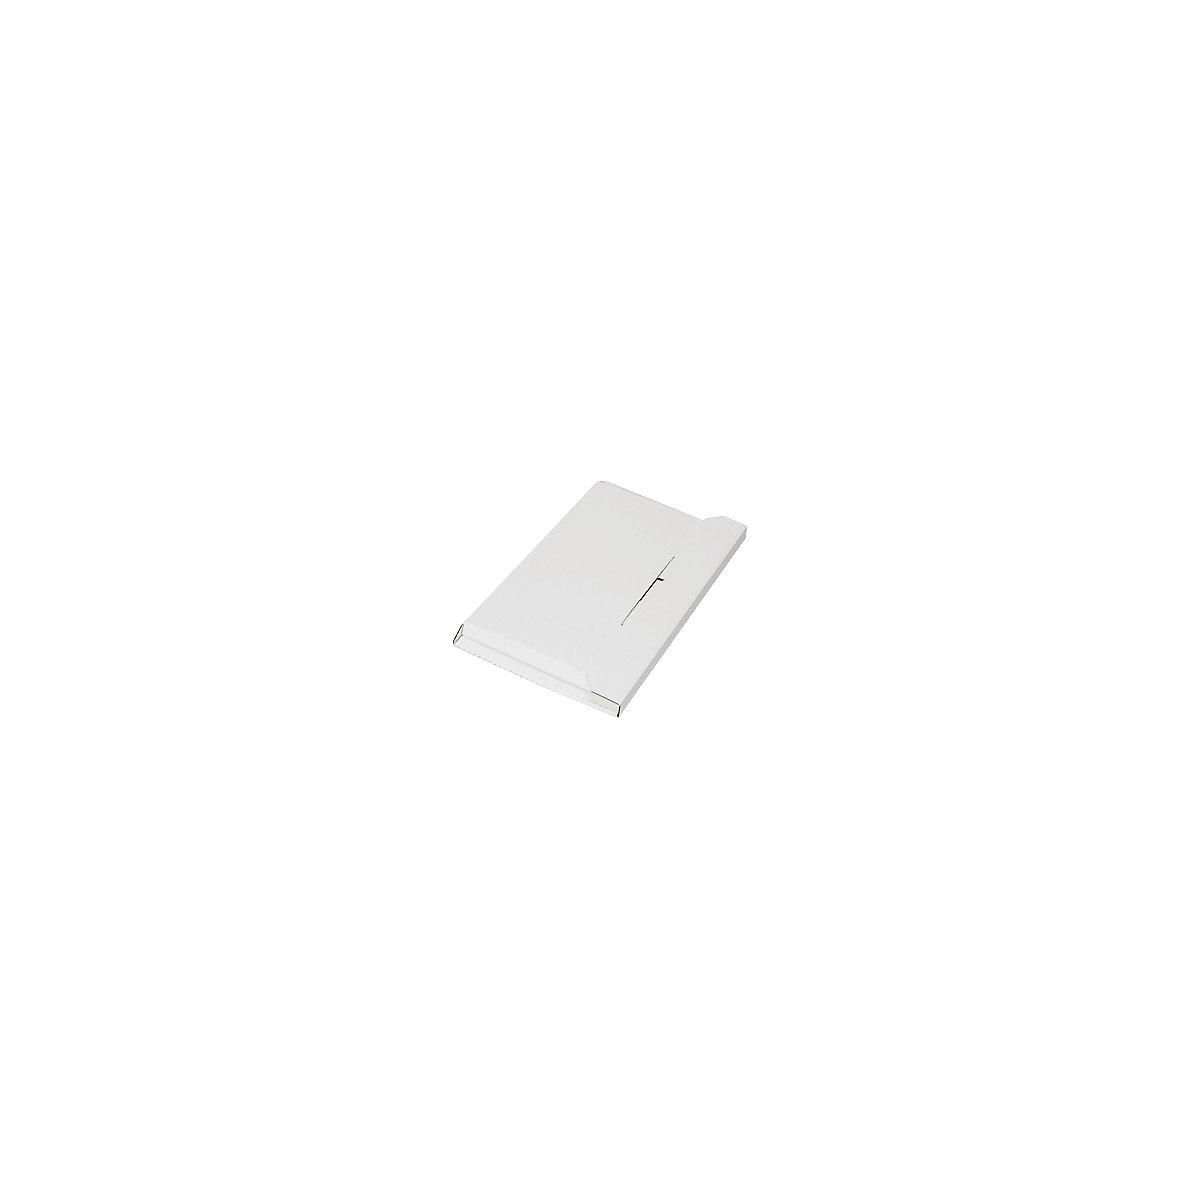 Flach-/Kalender-Pack, 1-wellig, Innen-LxBxH 340 x 240 x 10 mm, weiß, ab 20 Stk-12